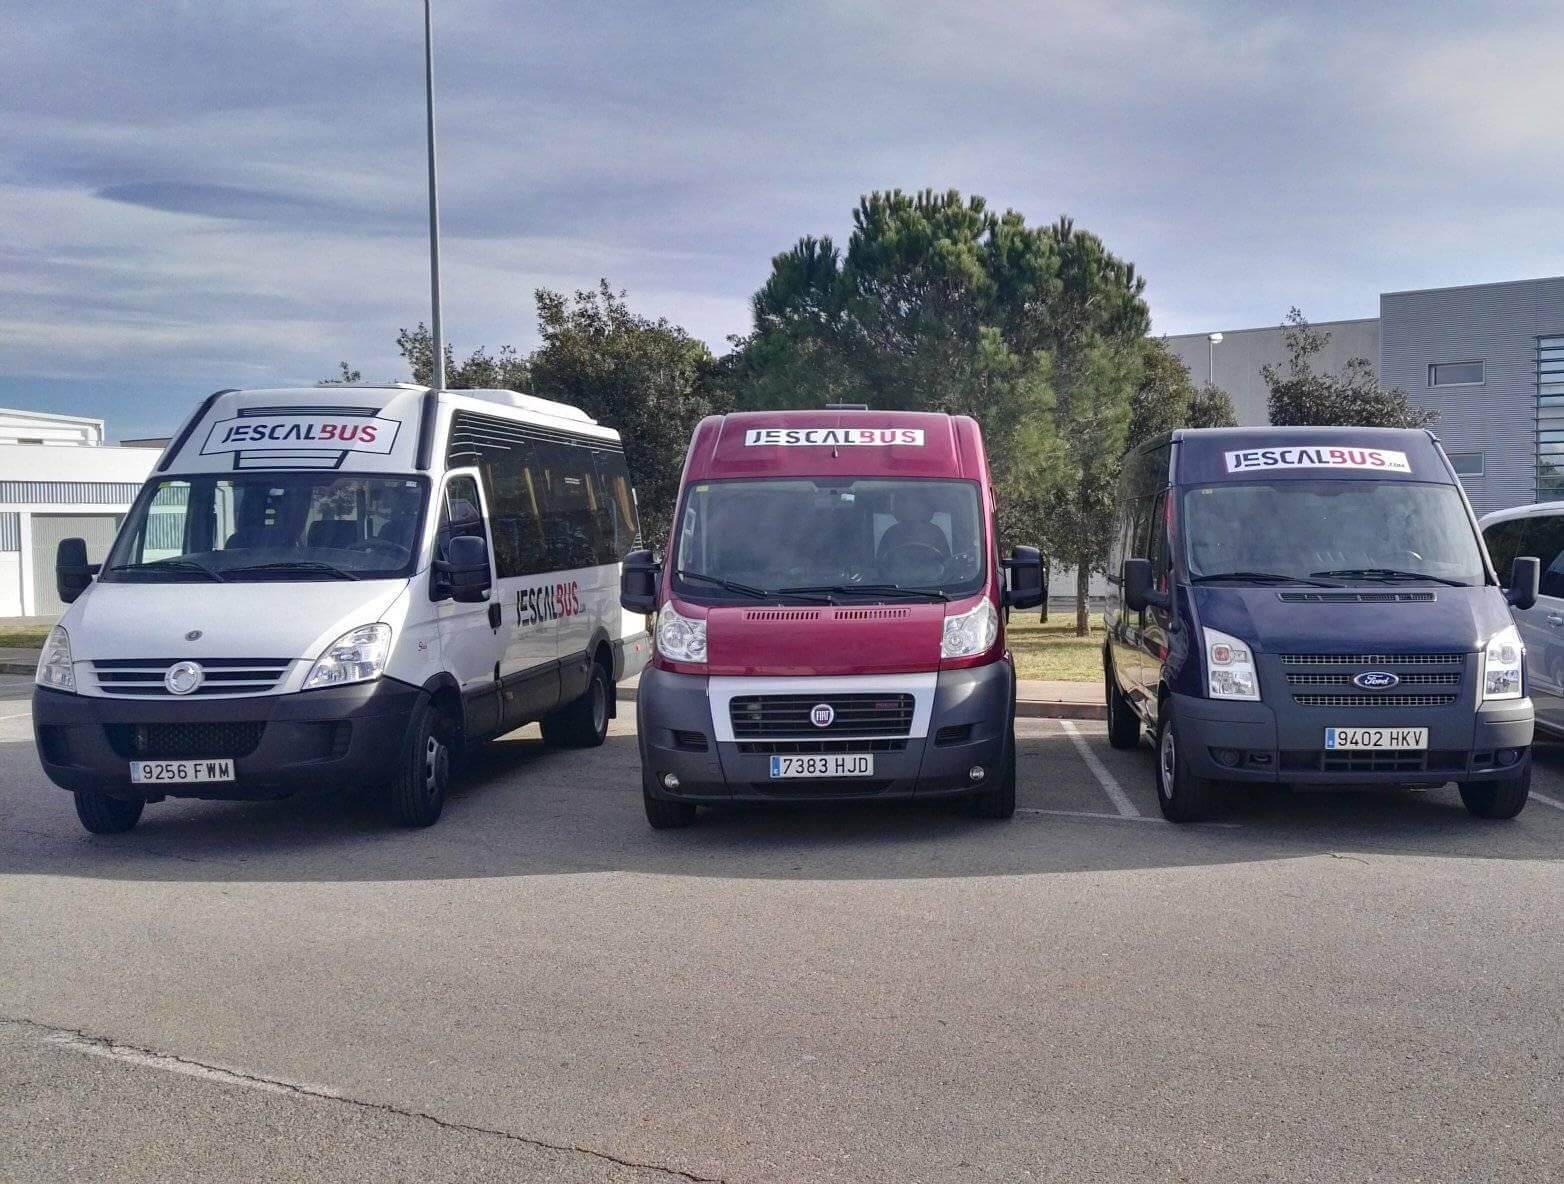 Alquila un 13 asiento Minibús (. . 2014) de JESCALBUS S.A.U. en Girona 